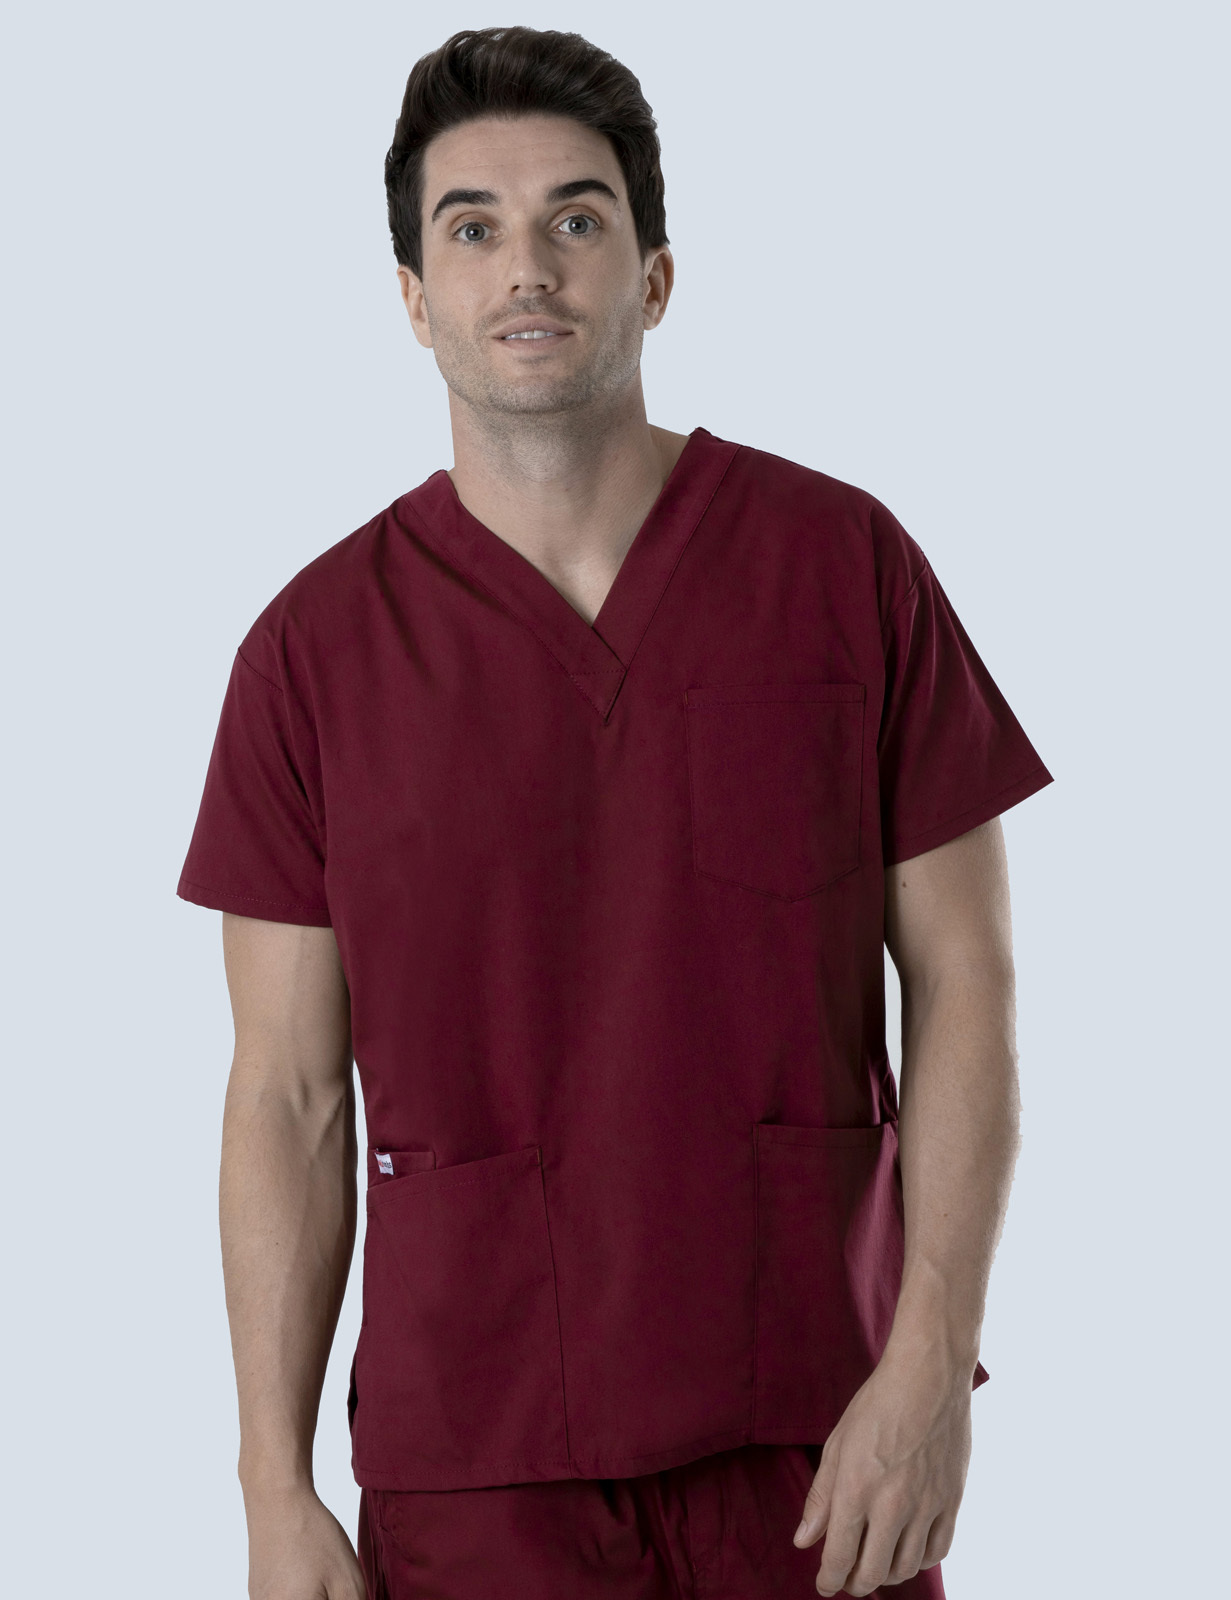 The Alfred Hospital - Pathology (4 Pocket Scrub Top in Burgundy incl Logos)